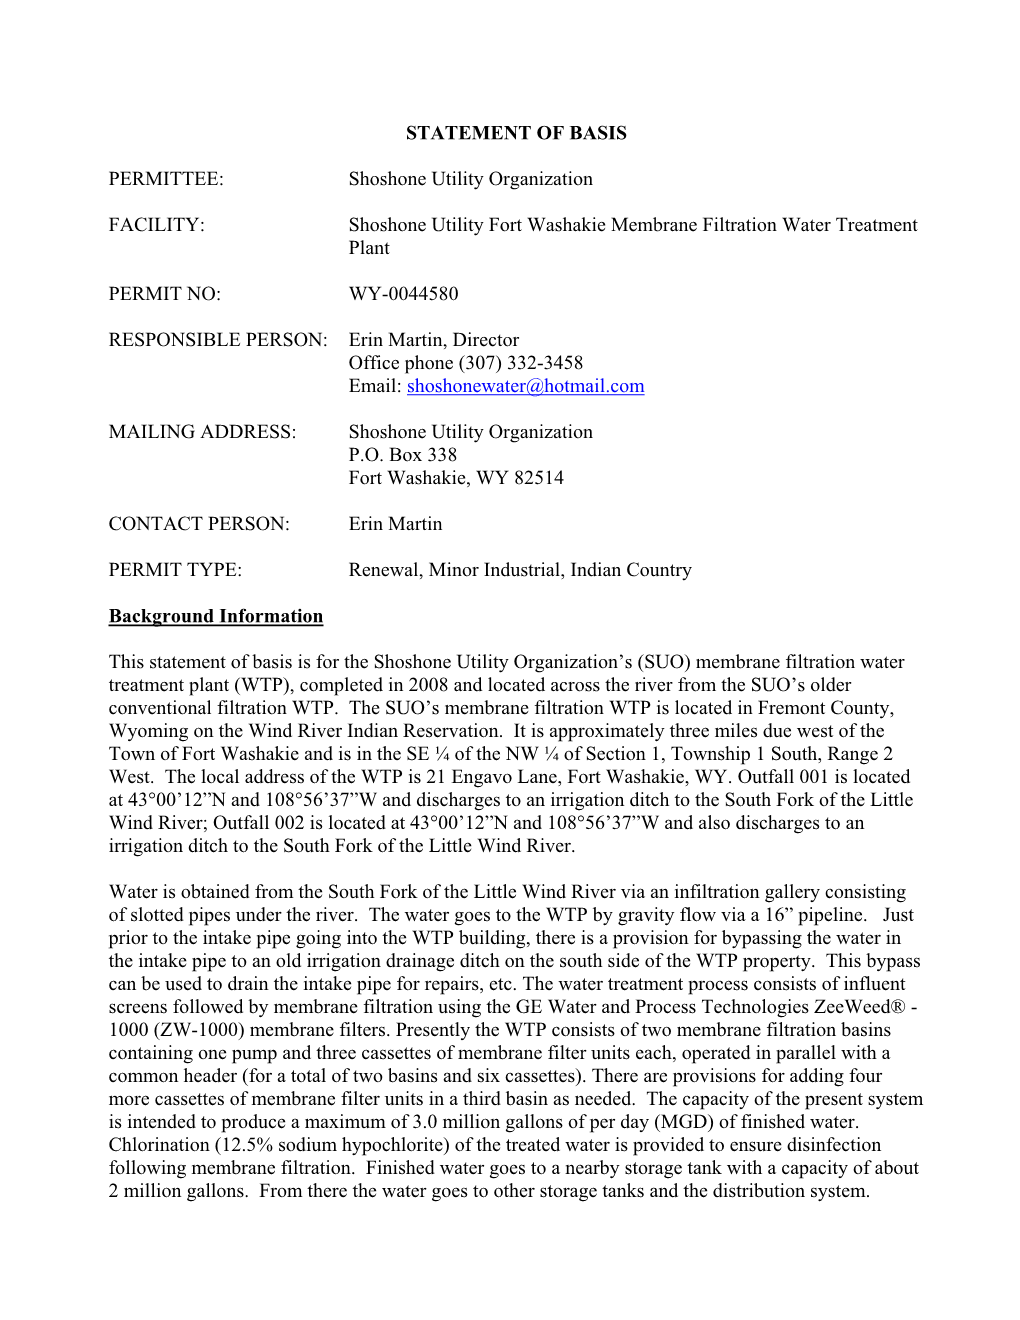 Statement of Basis for Shoshone Utility Organization Water